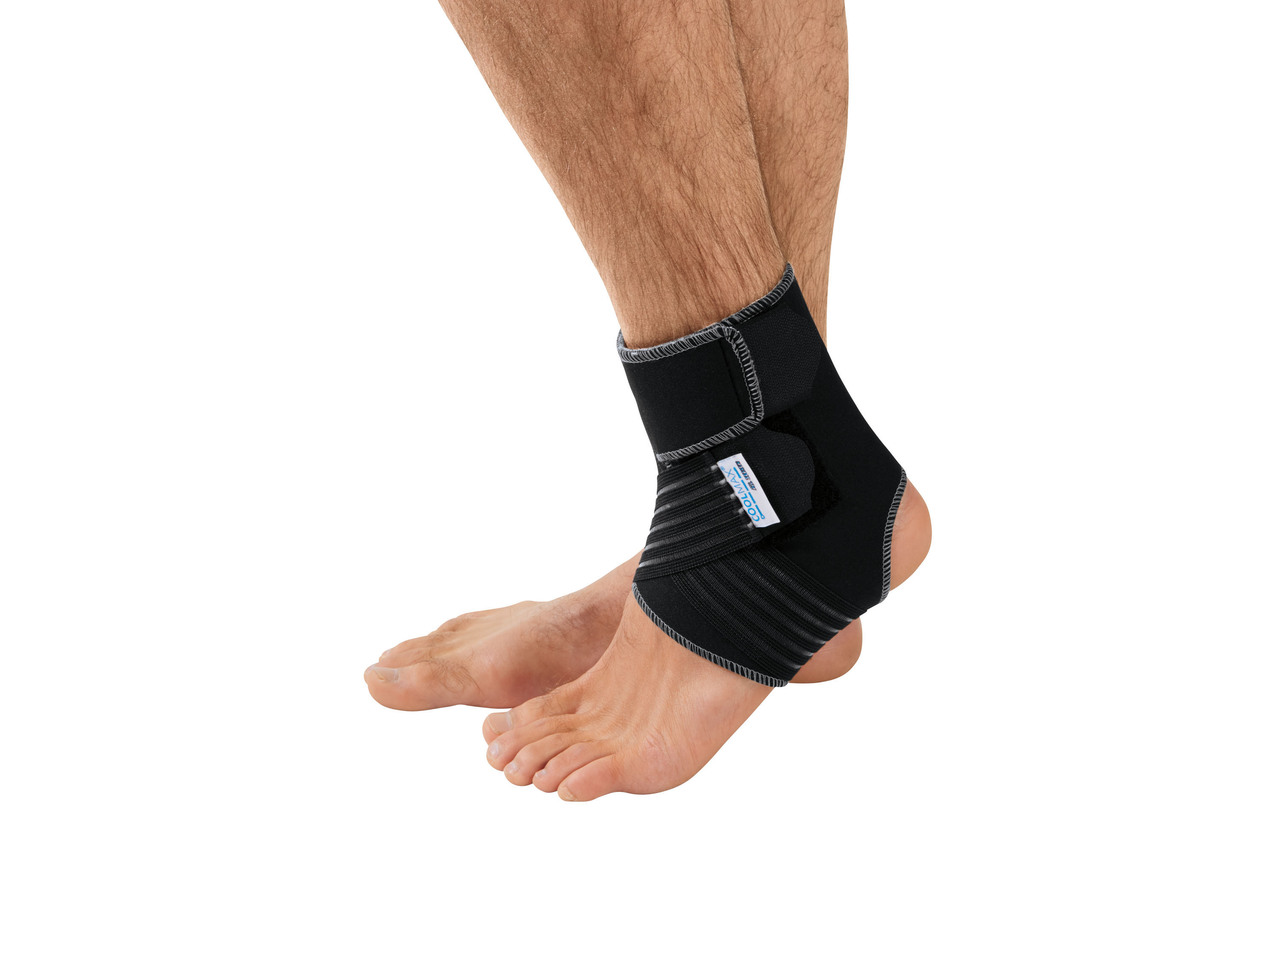 Pro Comfort Ankle Brace